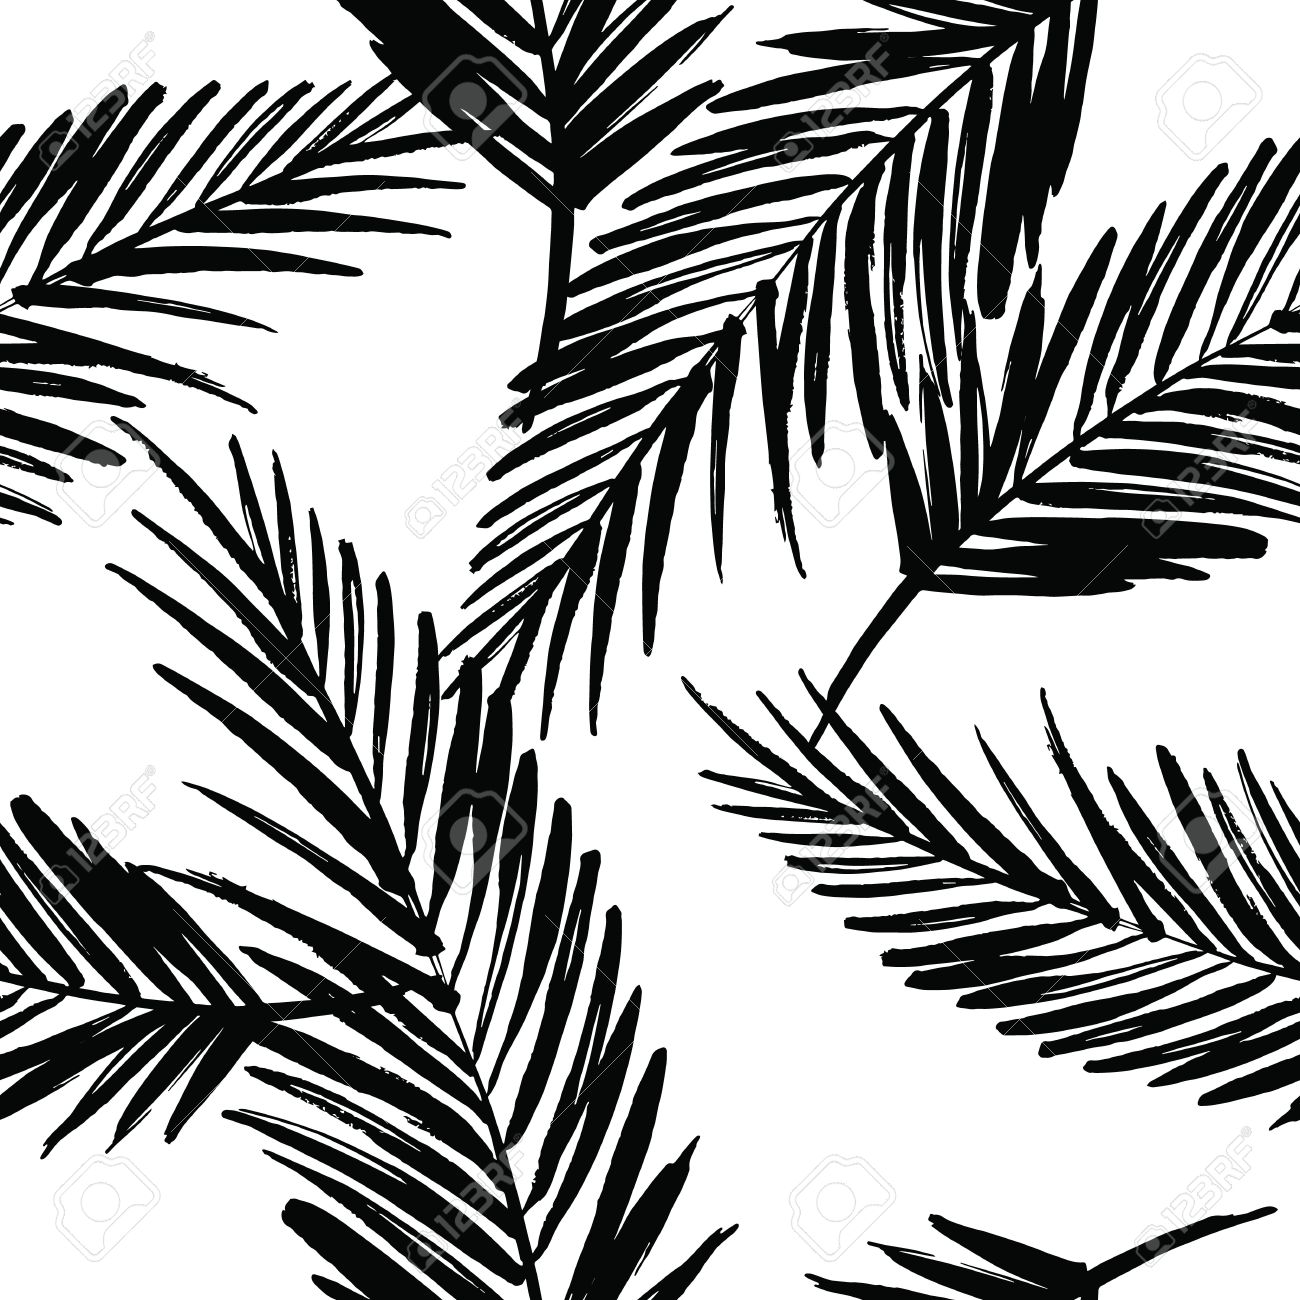 palm-leaf-drawing-at-getdrawings-free-download